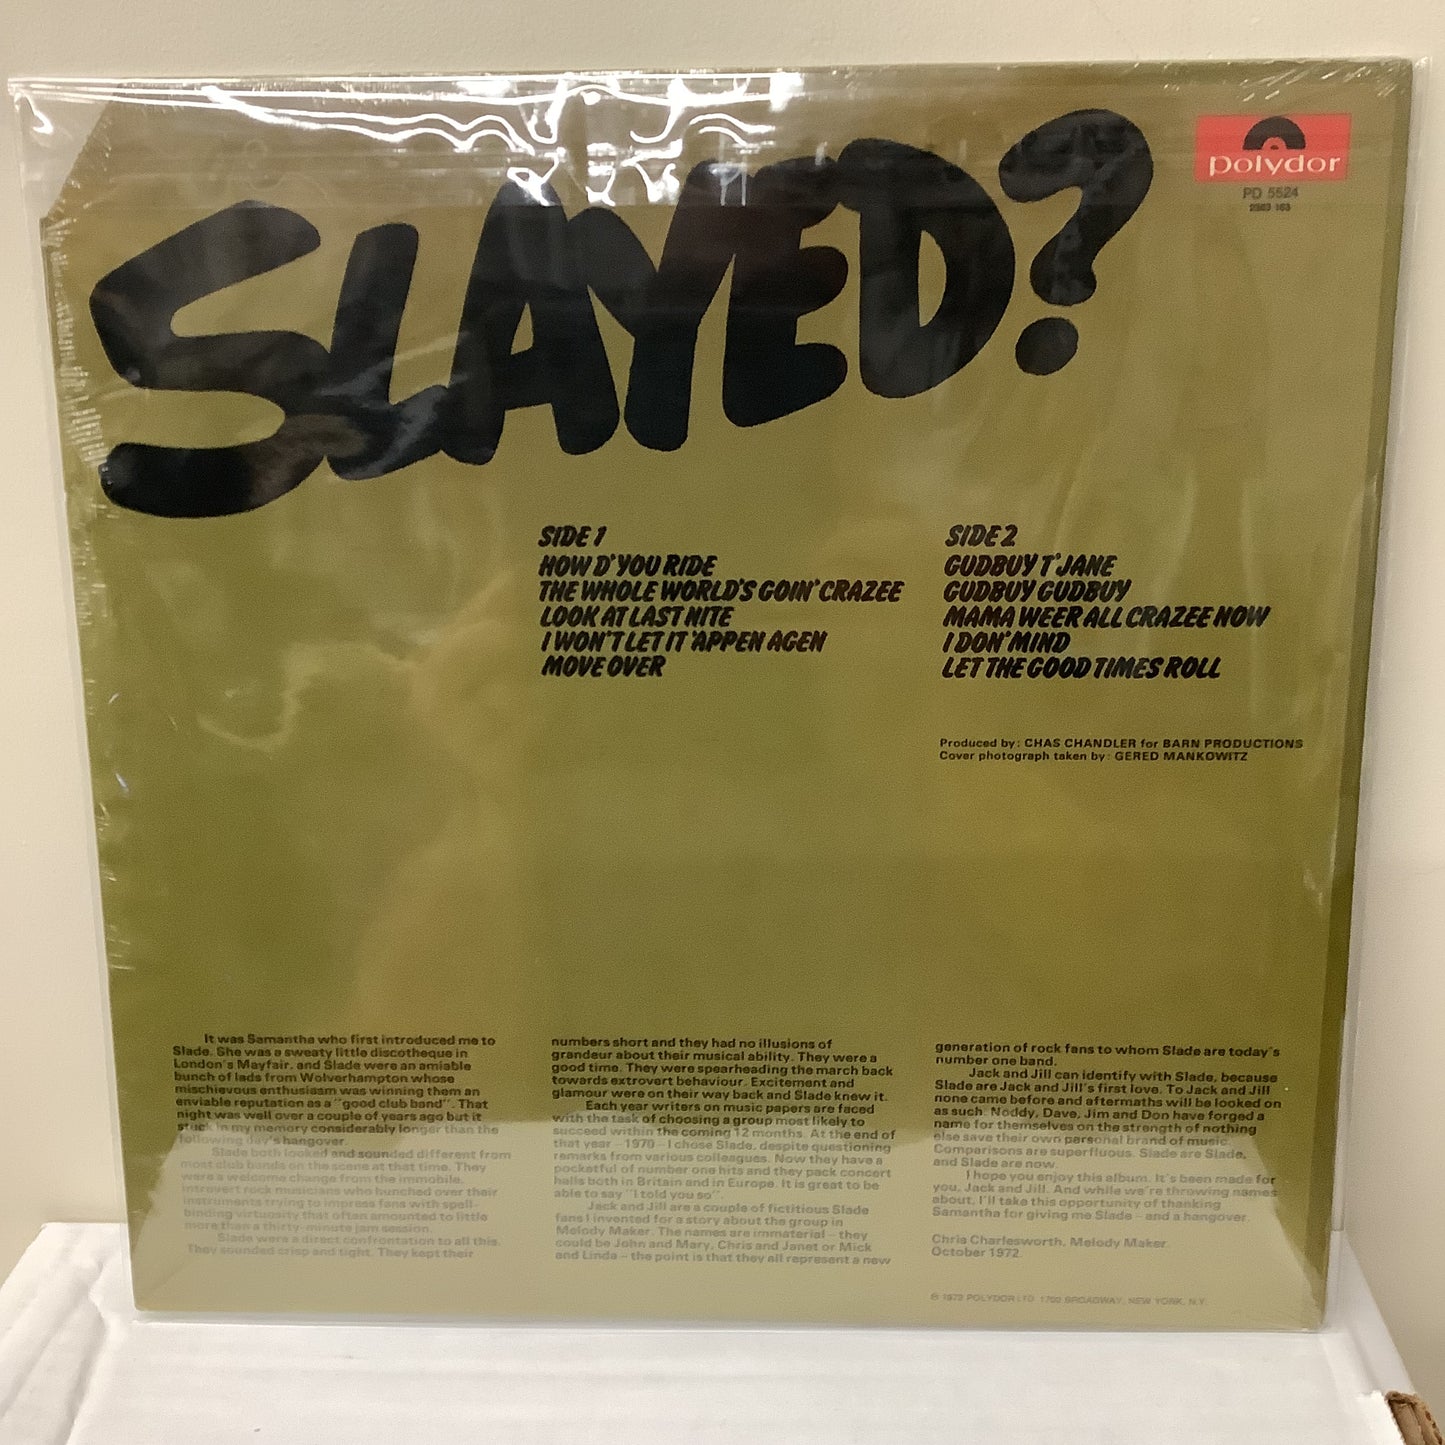 Slade - Slayed? - LP